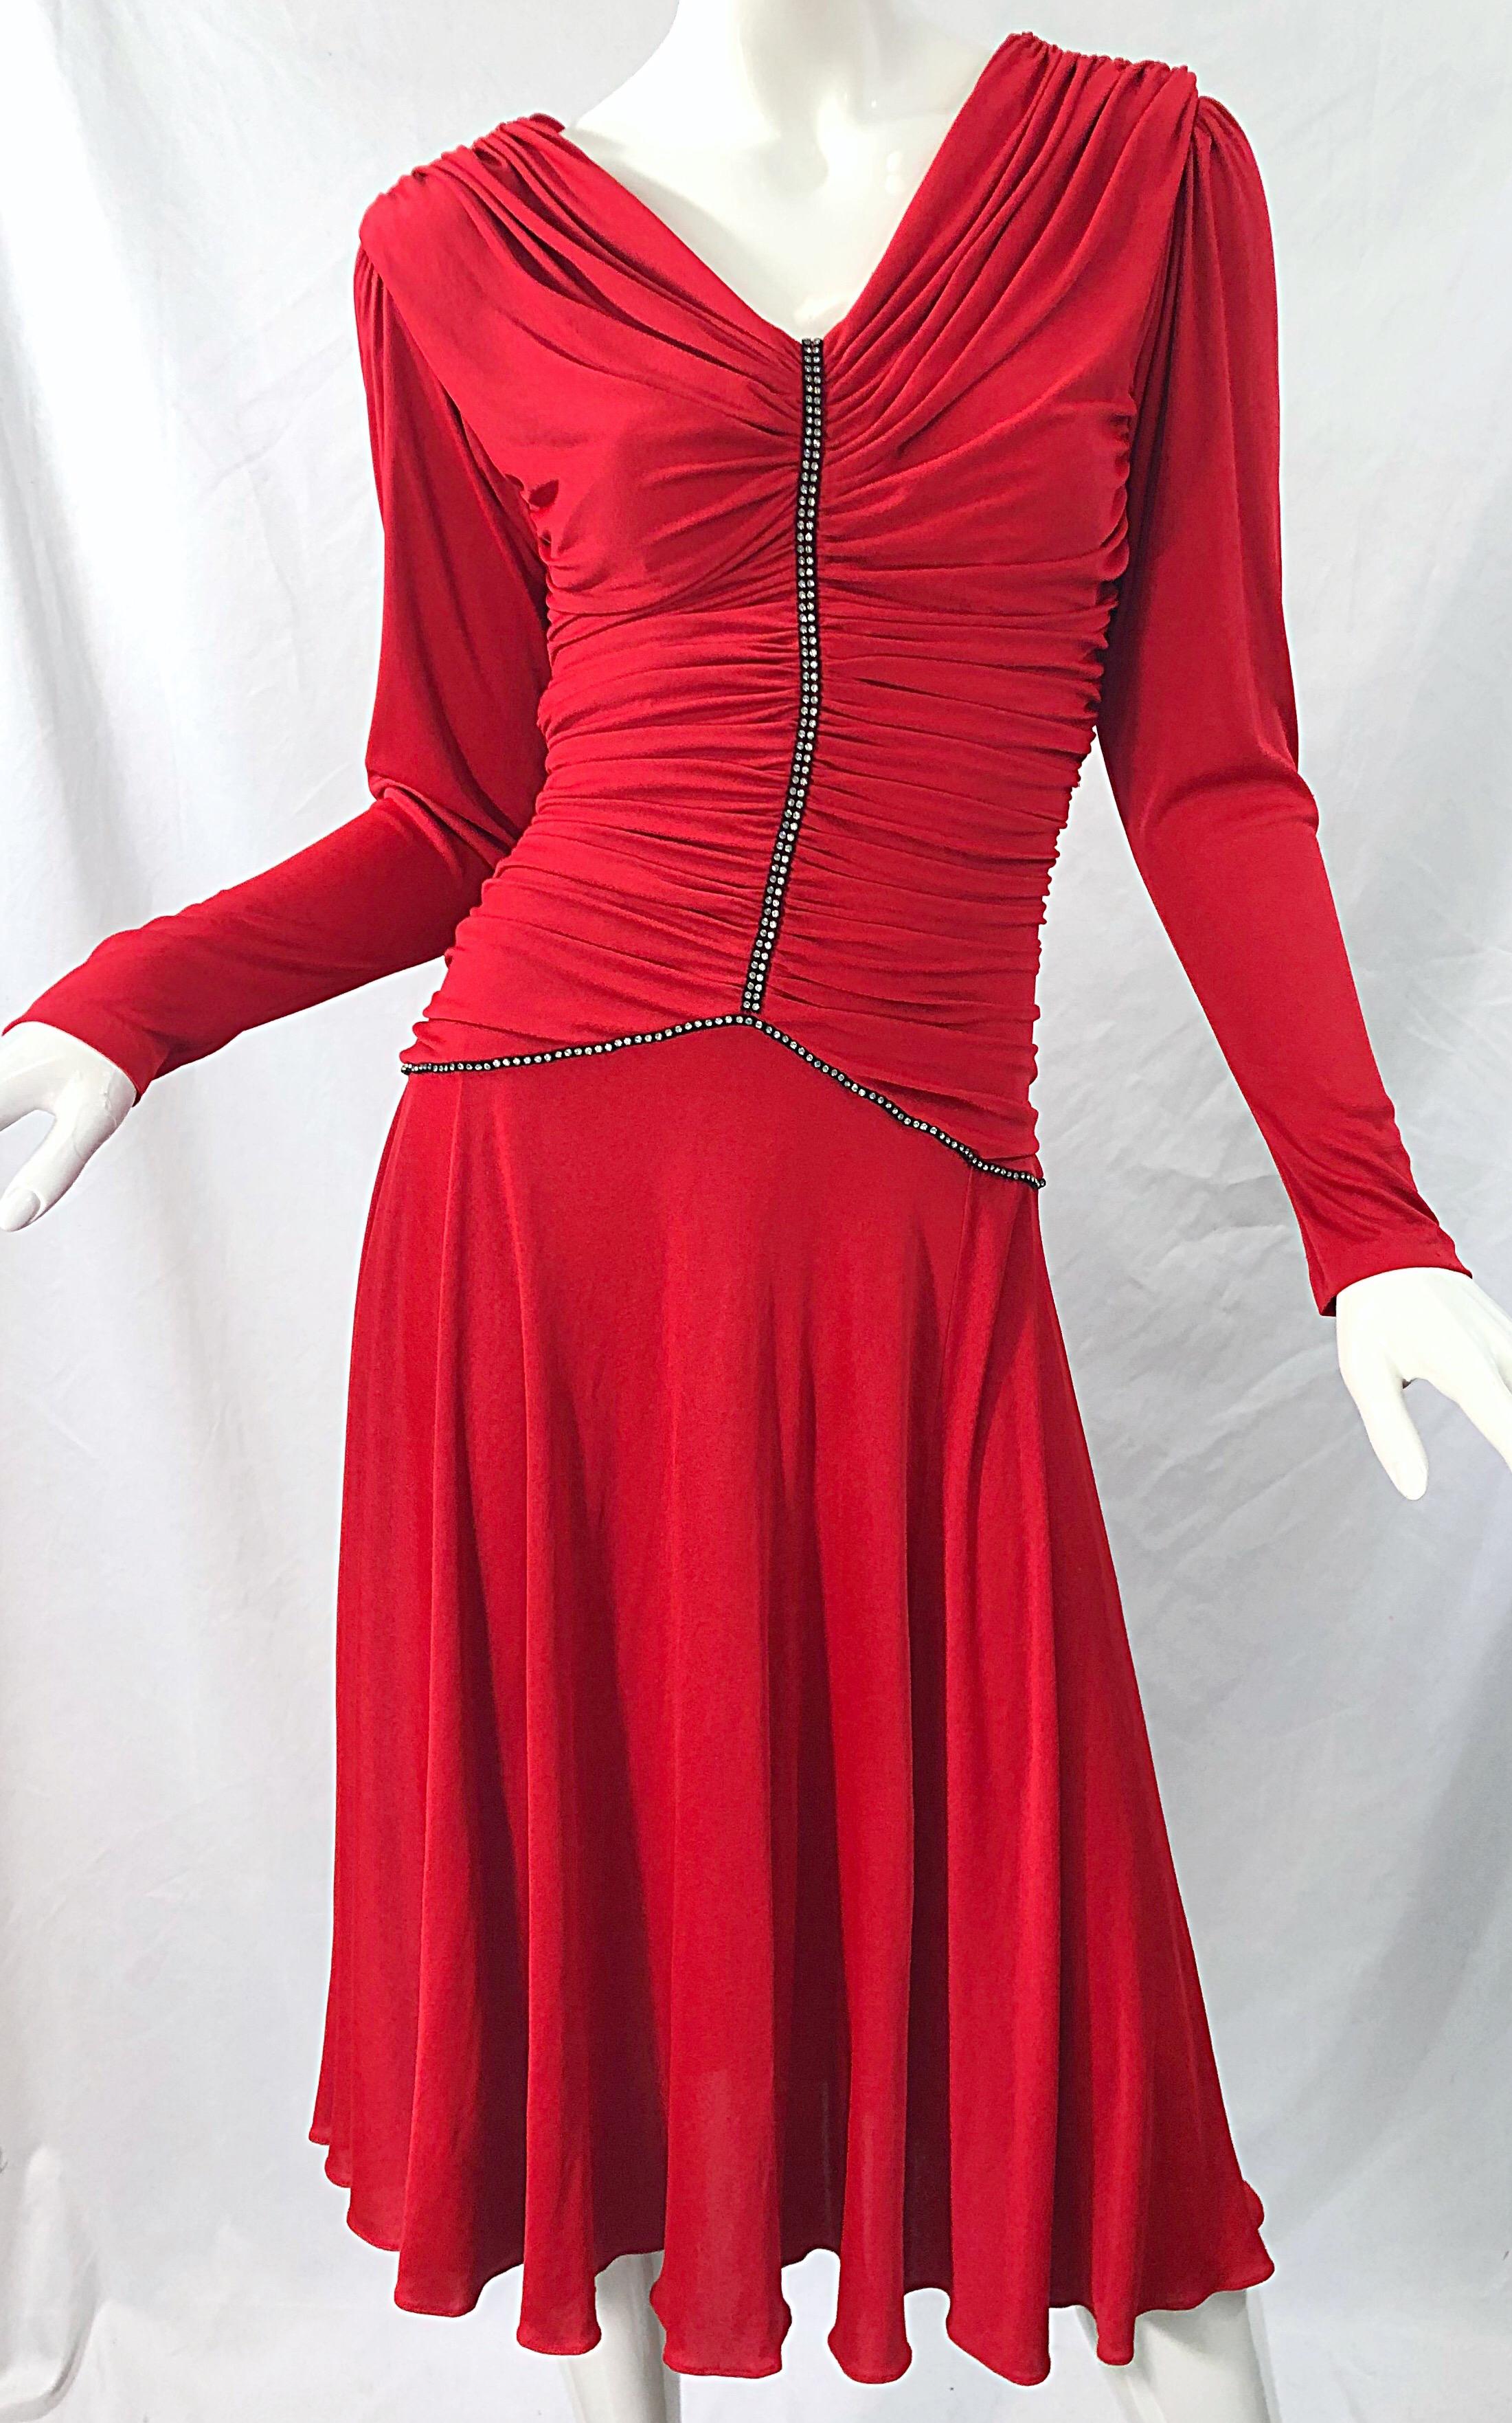 Women's 1970s Claraluna Original Lipstick Red Rhinestone Slinky Jersey Vintage 70s Dress For Sale